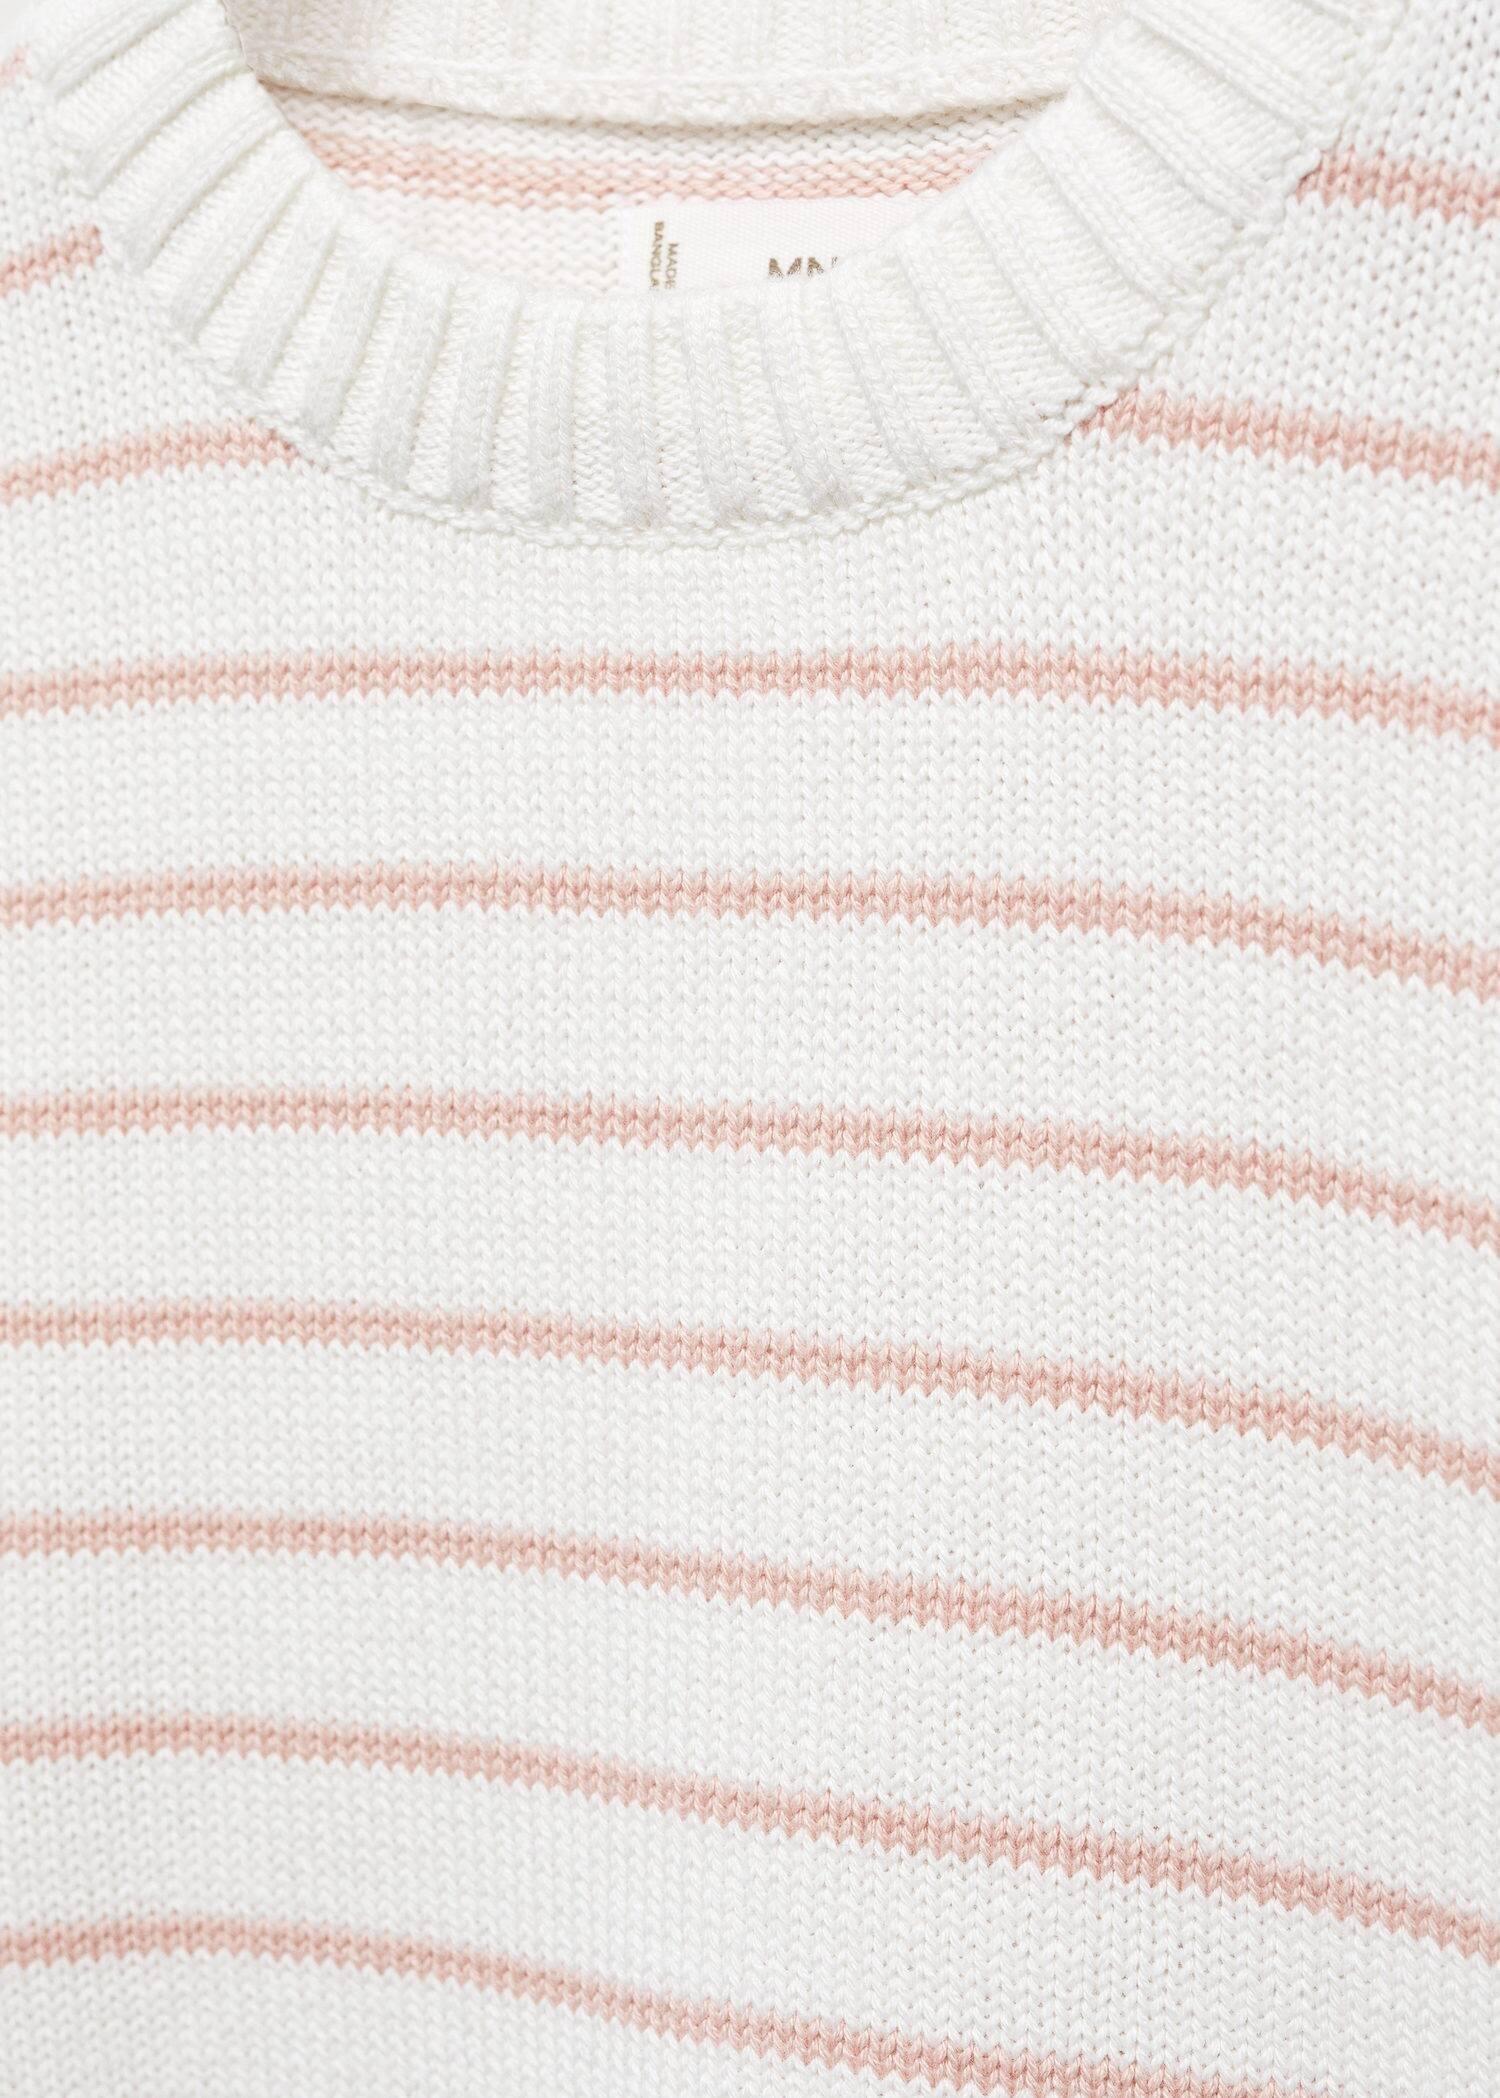 Mango - Pink Lt-Pastel Striped Cotton-Blend Sweater, Kids Girls